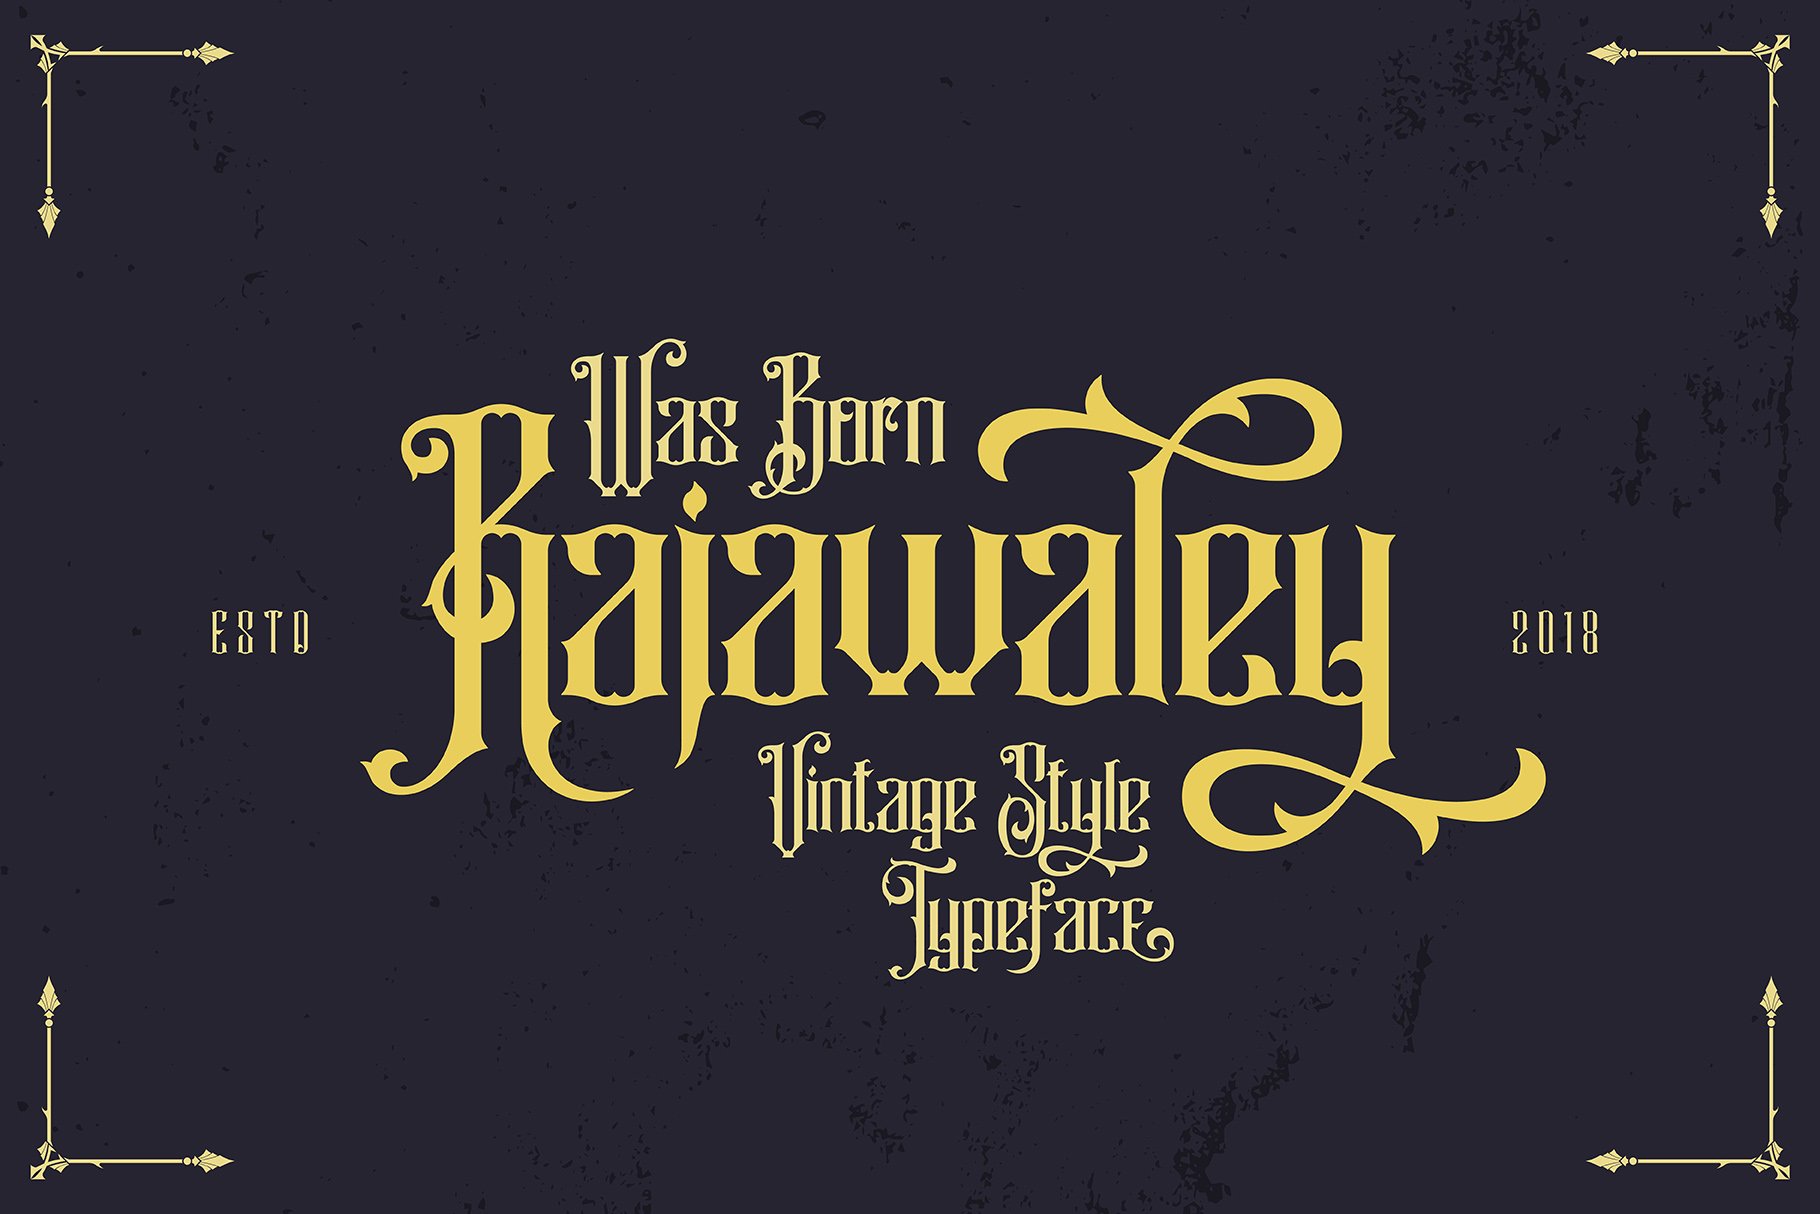 Rajawaley Typeface cover image.